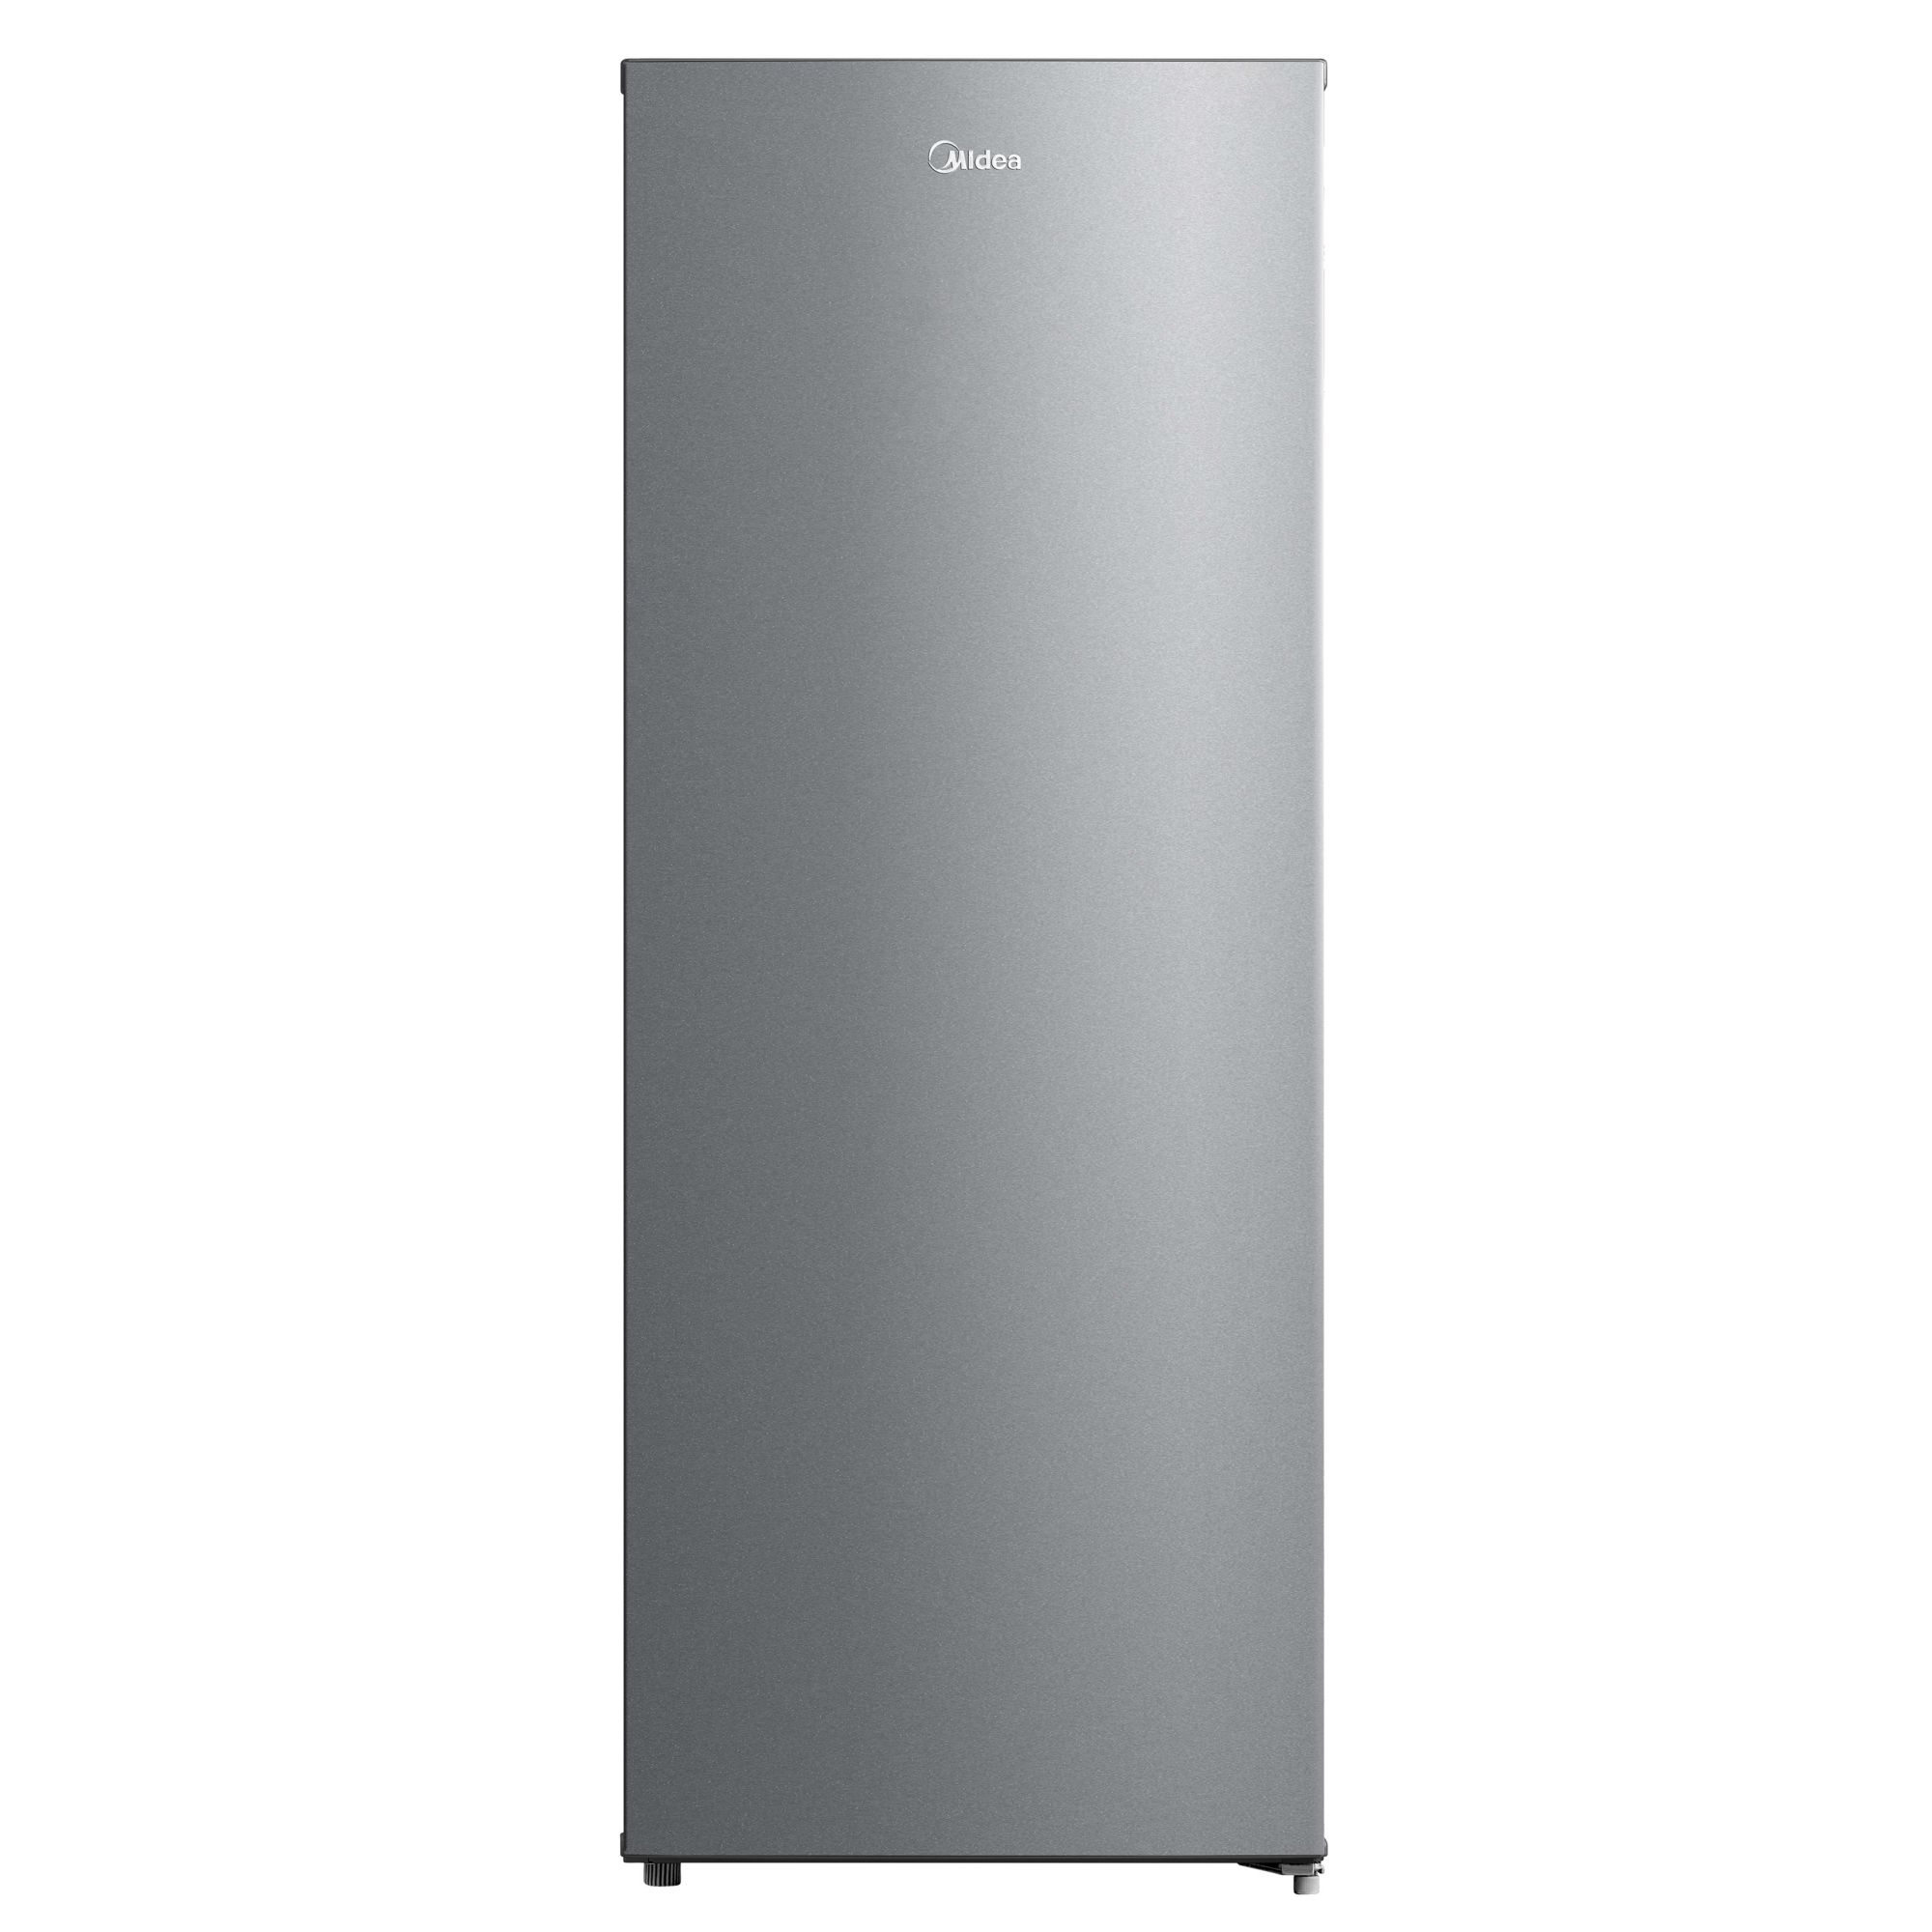 Large Mini fridge w/ freezer - appliances - by owner - sale